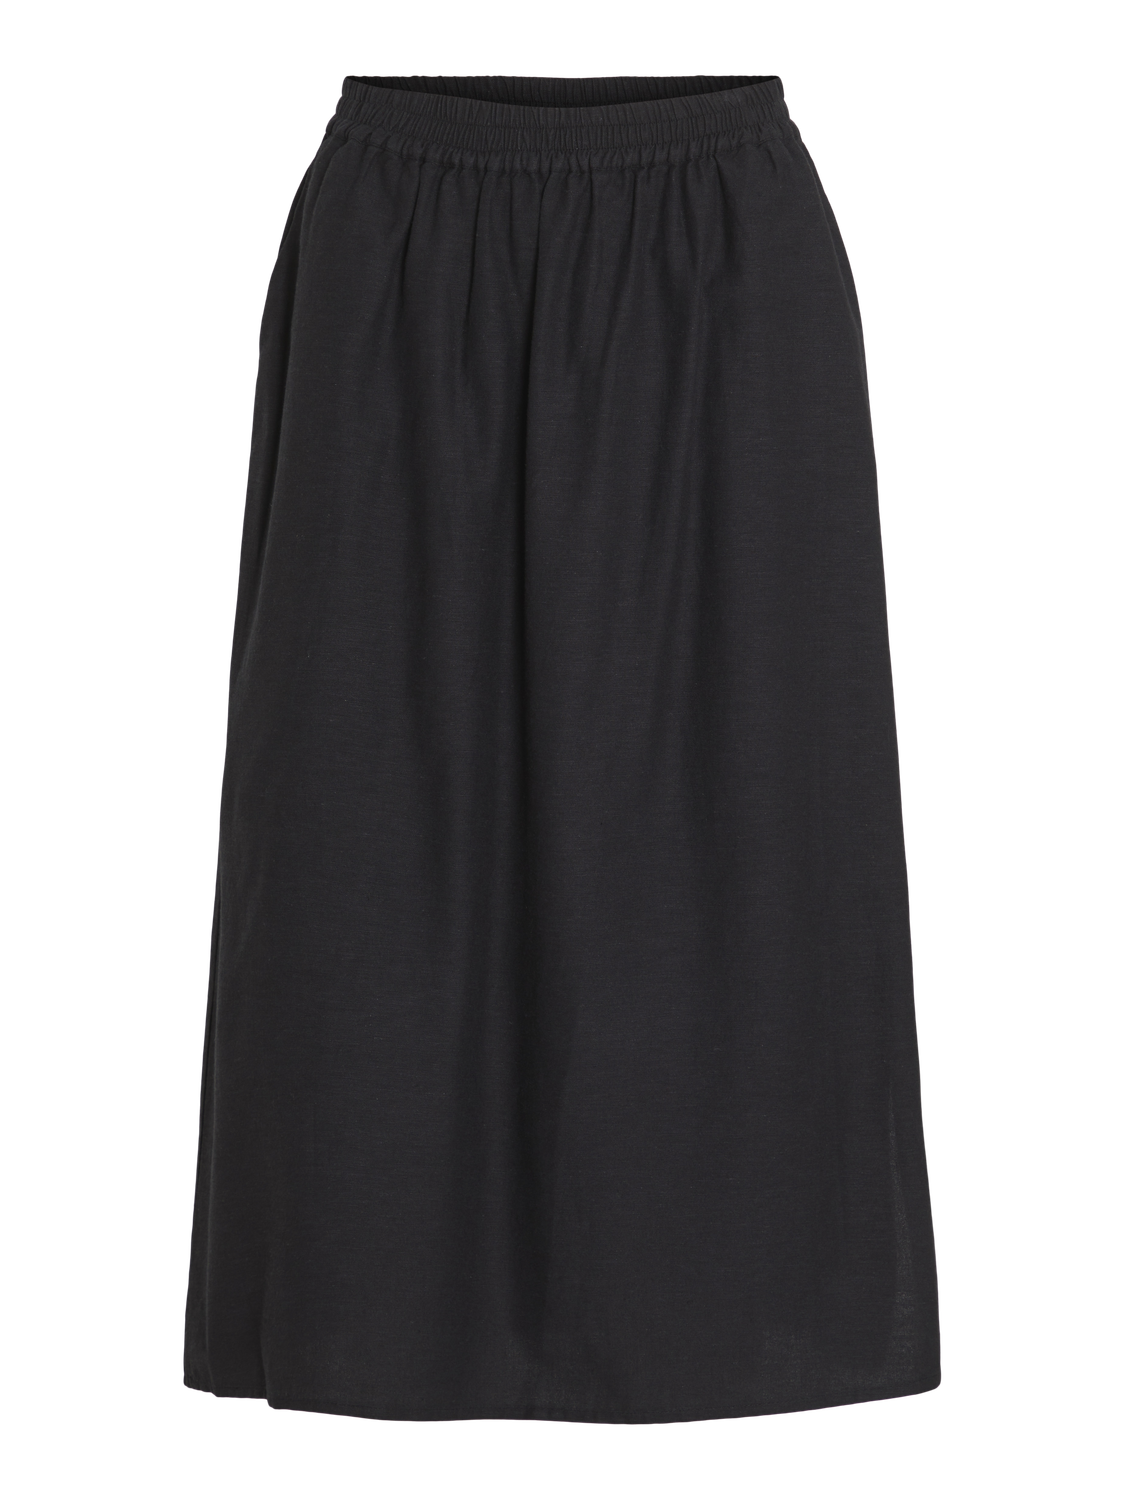 VIPRISILLA Skirt - Black Beauty